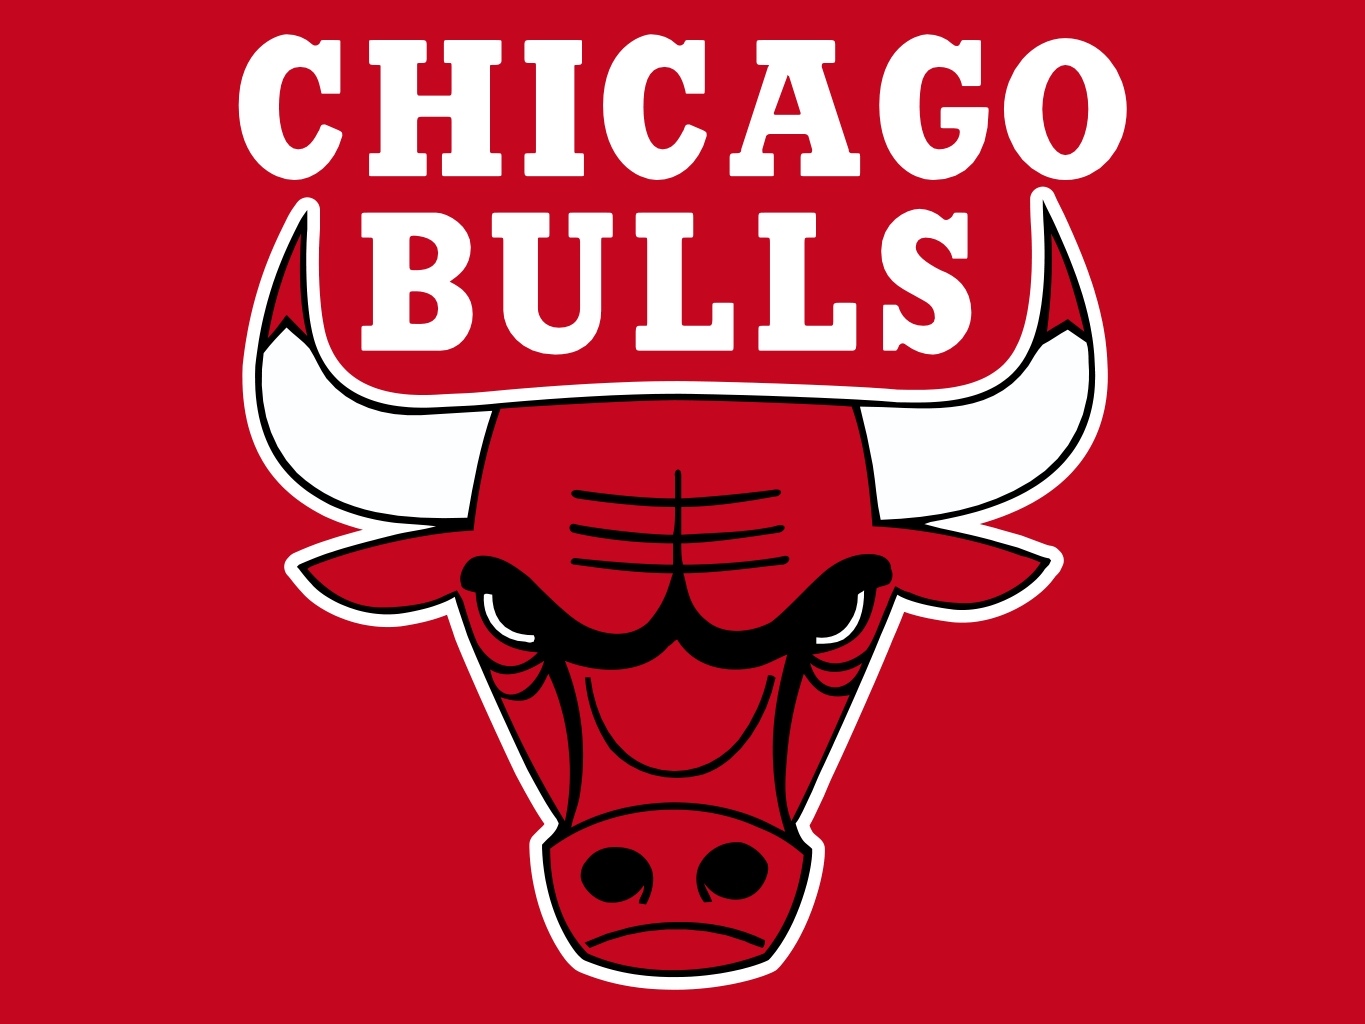 Bulls knock off Bobcats; Boozer injured